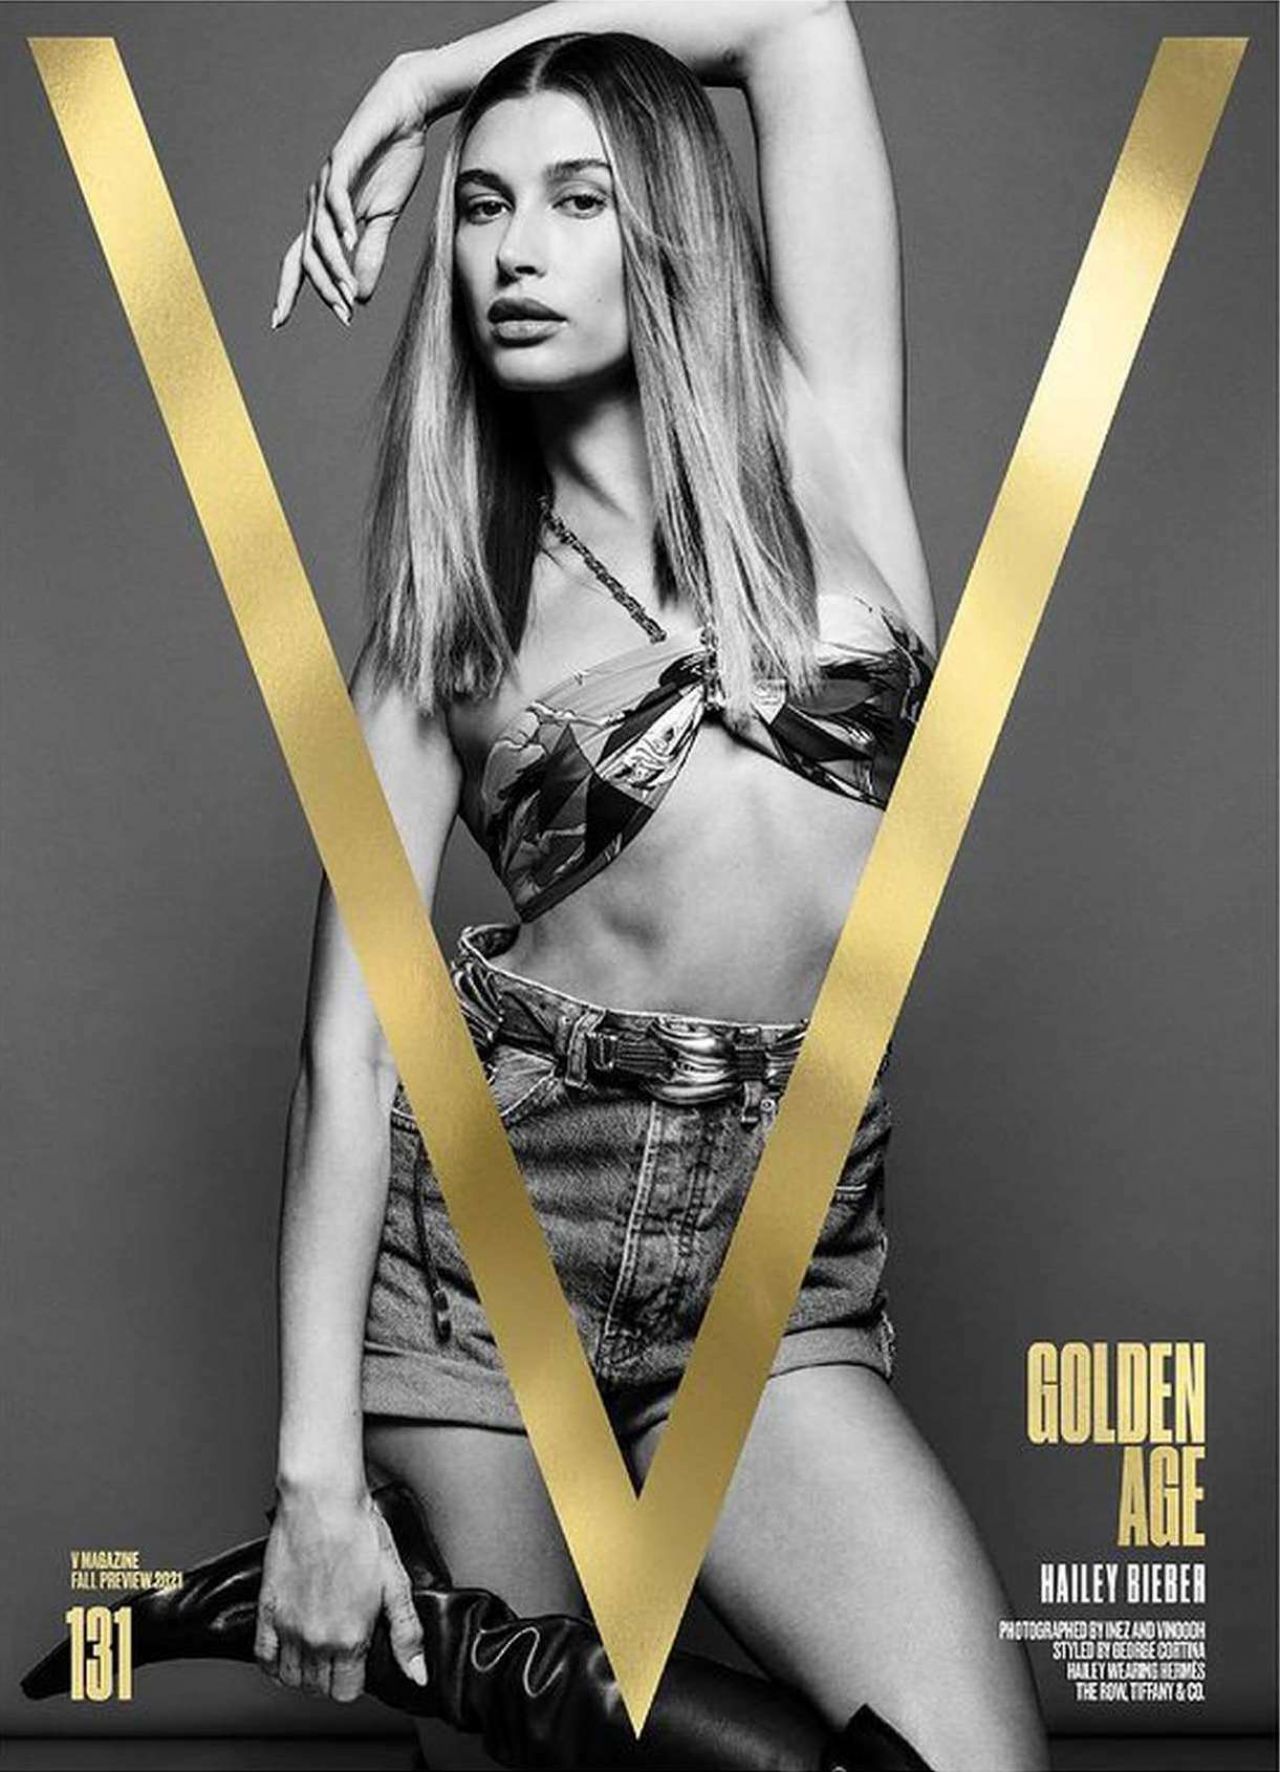 V magazine. Хейли Болдуин на обложке журнала. V Magazine журнал обложки. Логотип Rhode Хейли. Экстрасенша из журналов.